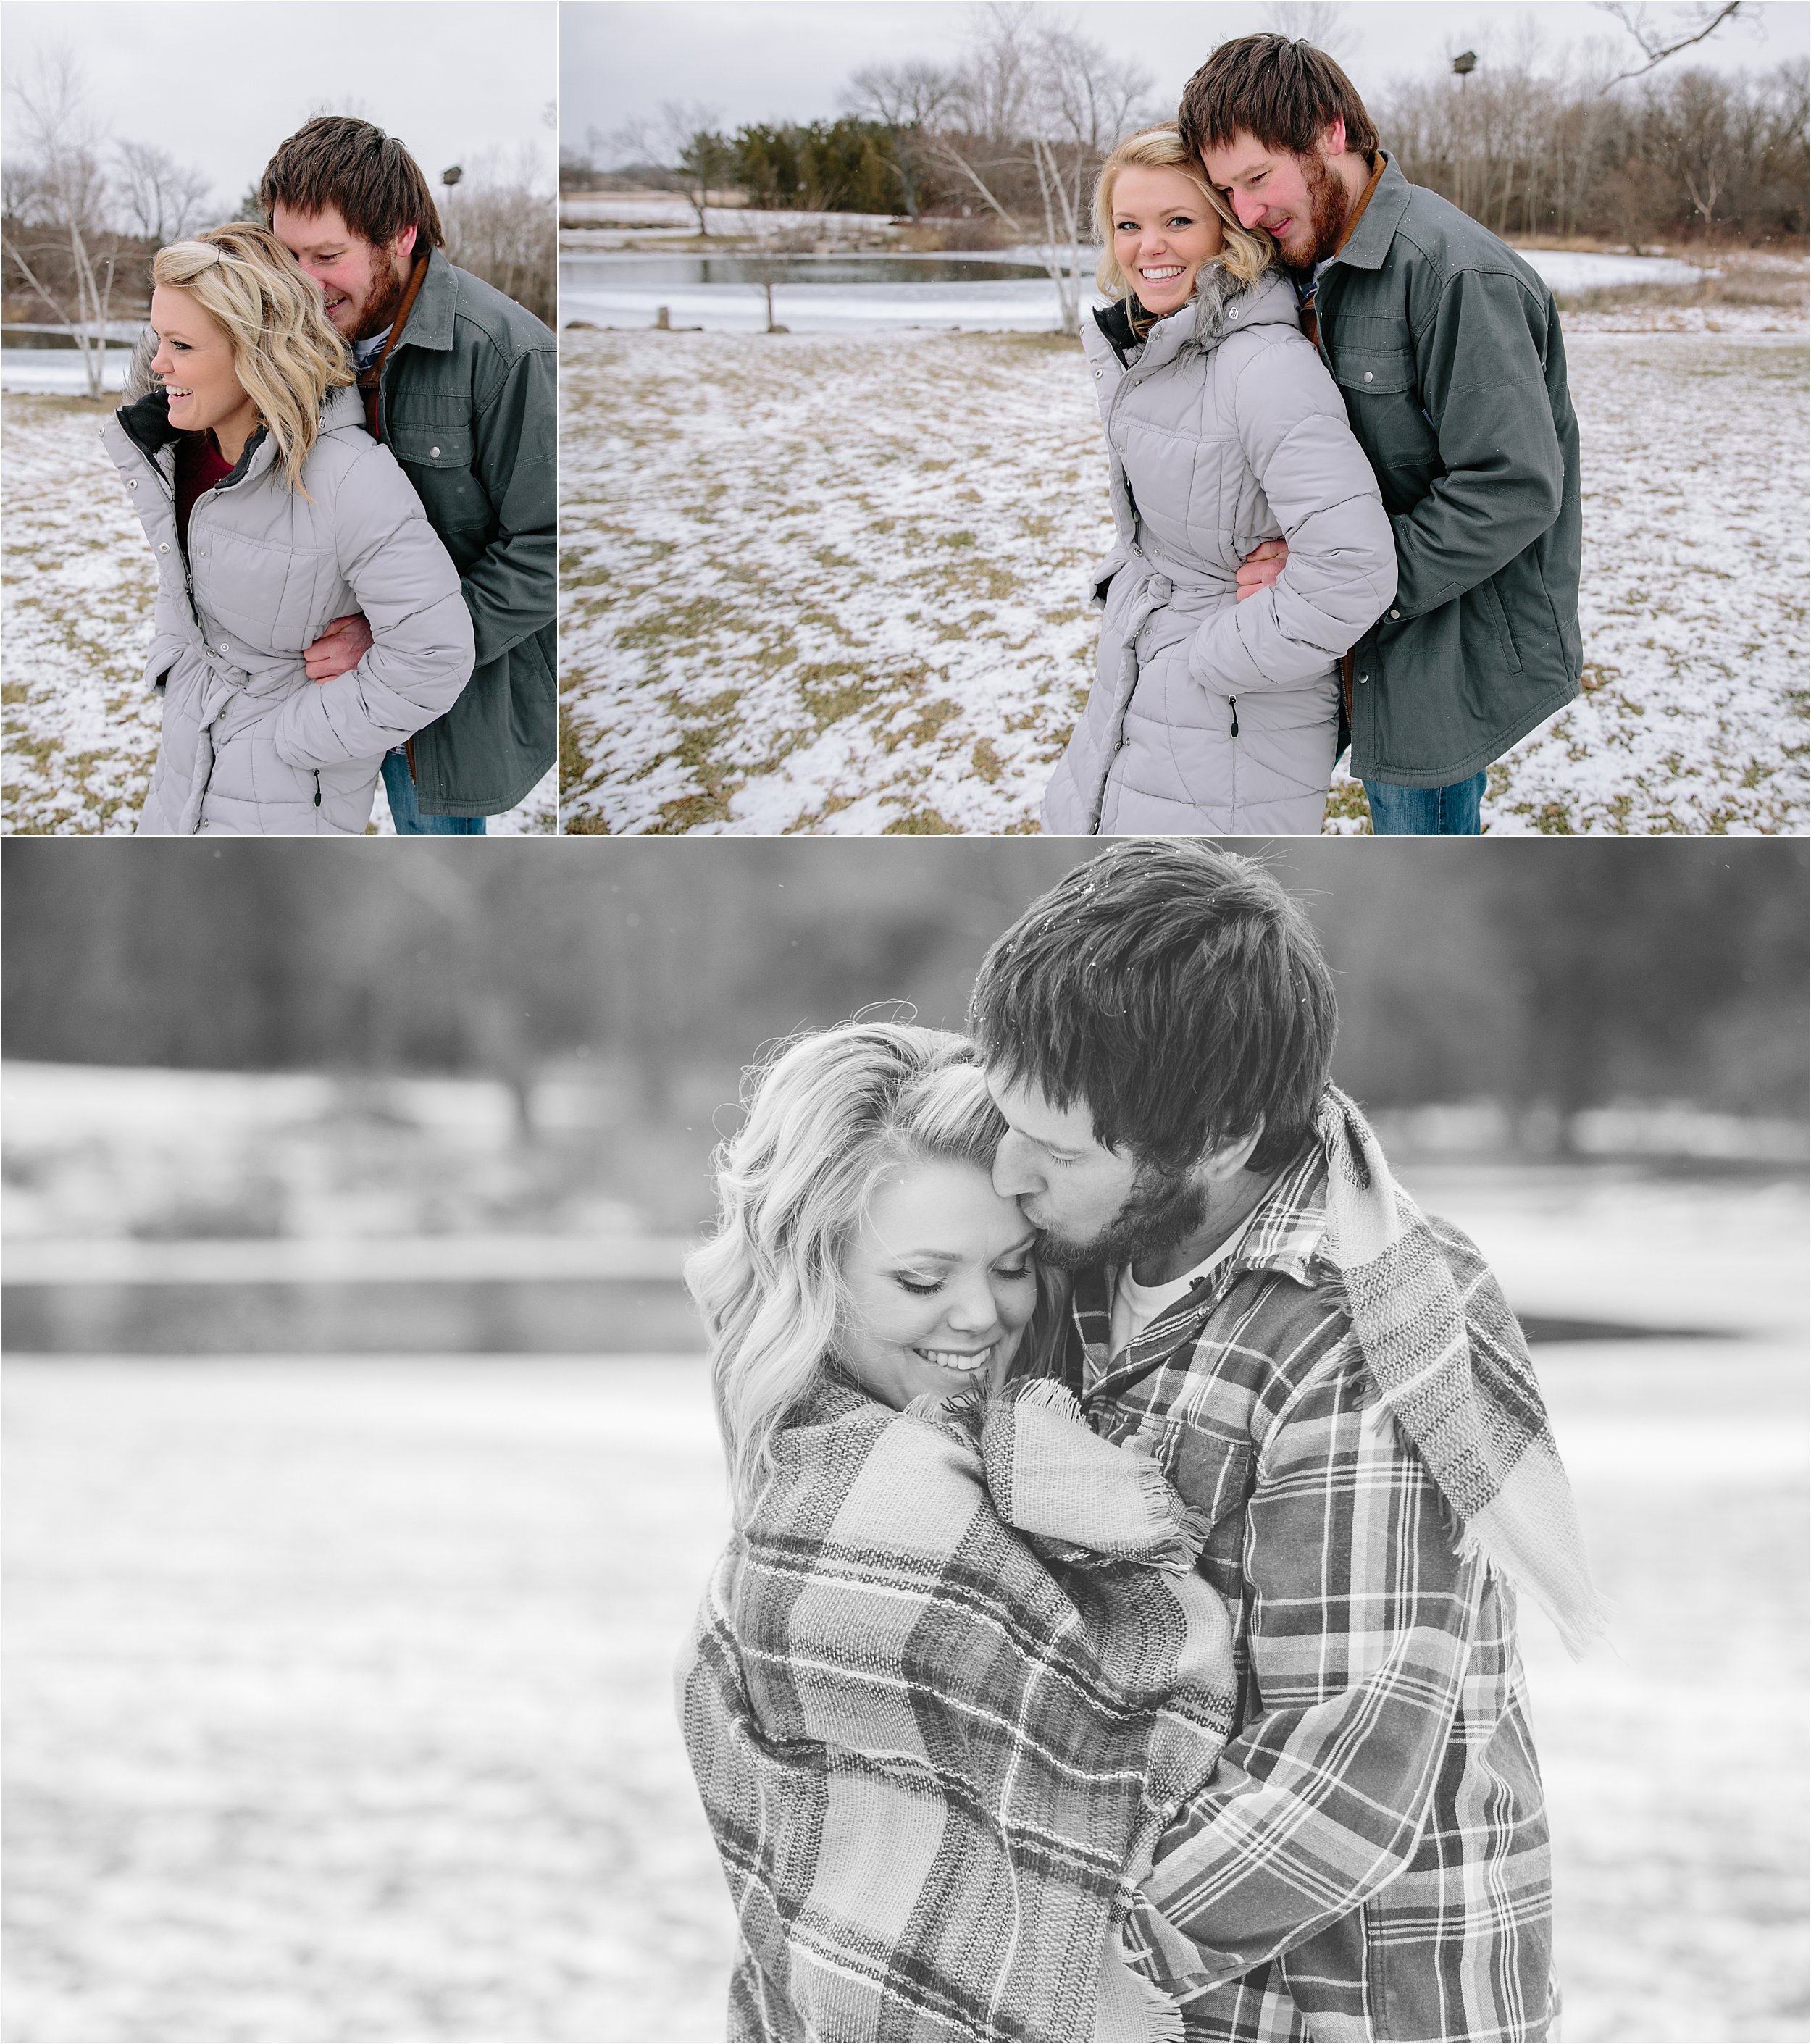 06-snowy-romantic-engagement-photos-on-private-farm.JPG